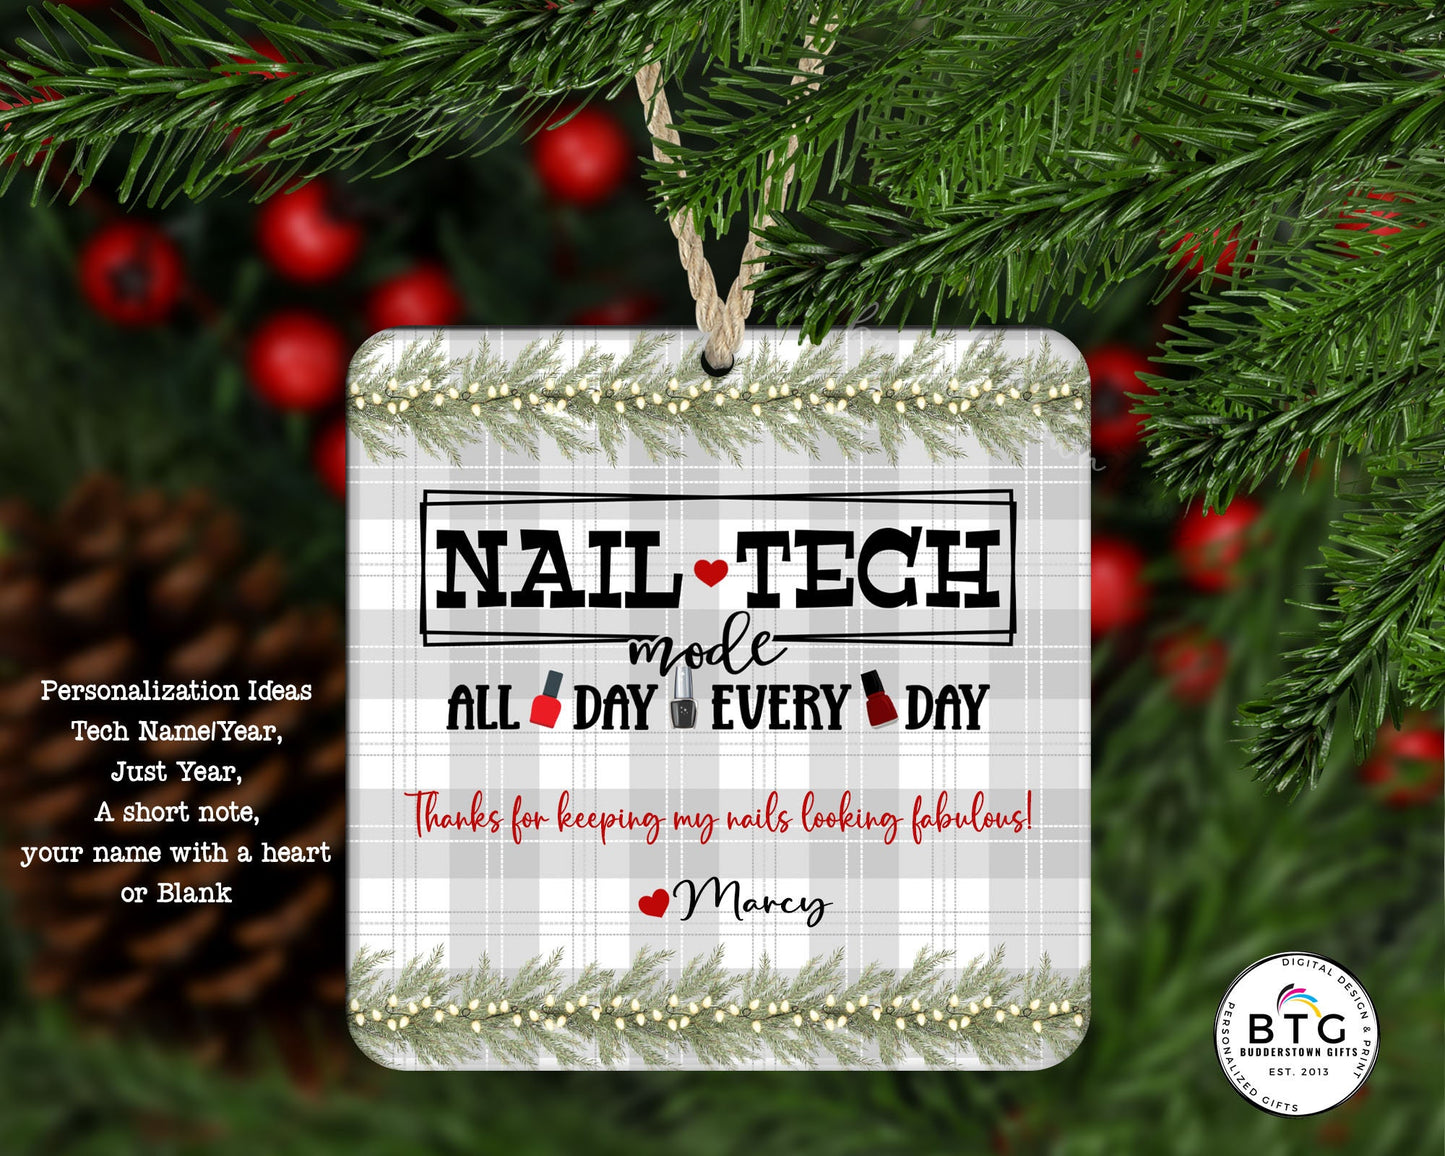 Nail Tech Ornament - Gift for Nail Tech Nail Girl - Nail Tech Personalized Ornament